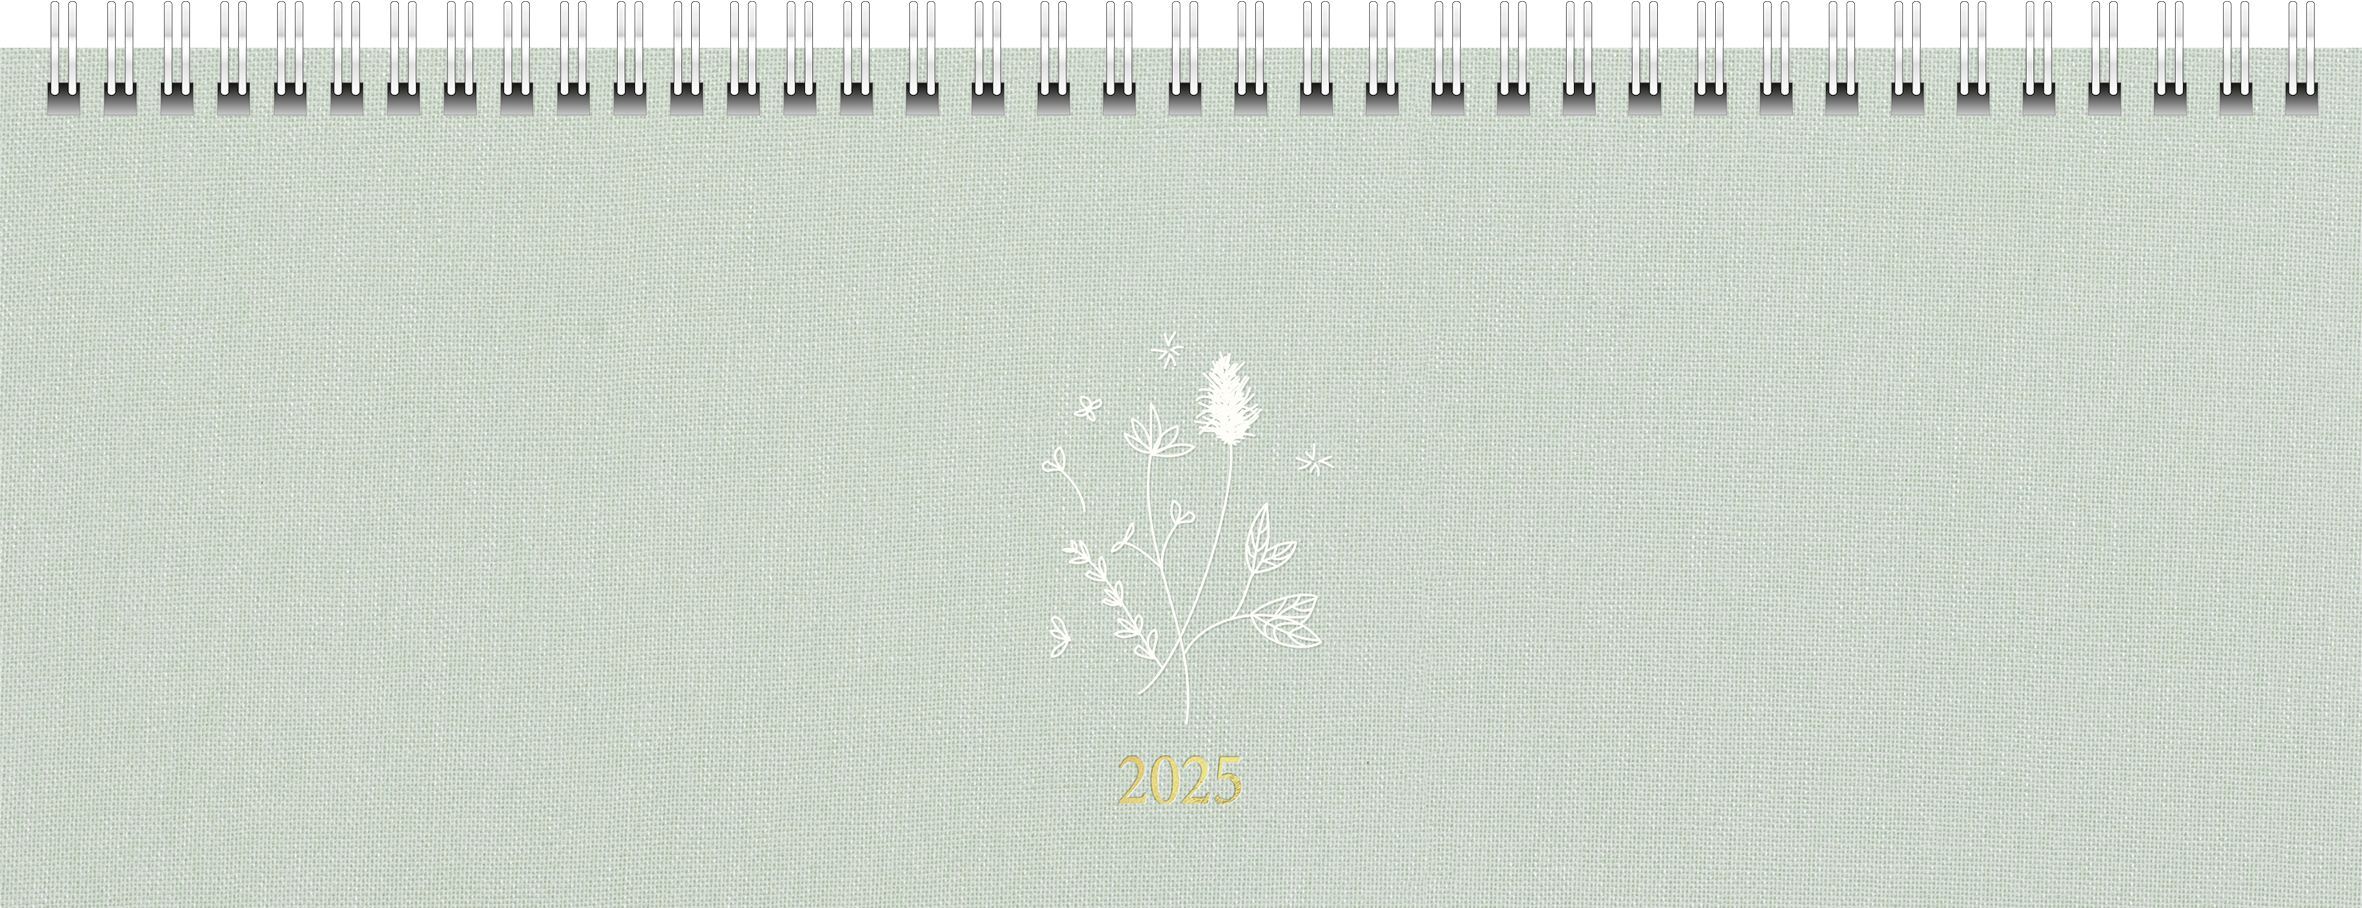 rido/idé 7036331005 Querterminbuch Modell Young Line (2025) Wild Flowers| 2 Seiten = 1 Woche| 297 × 105 mm| 128 Seiten| Leinen-Einband| mint